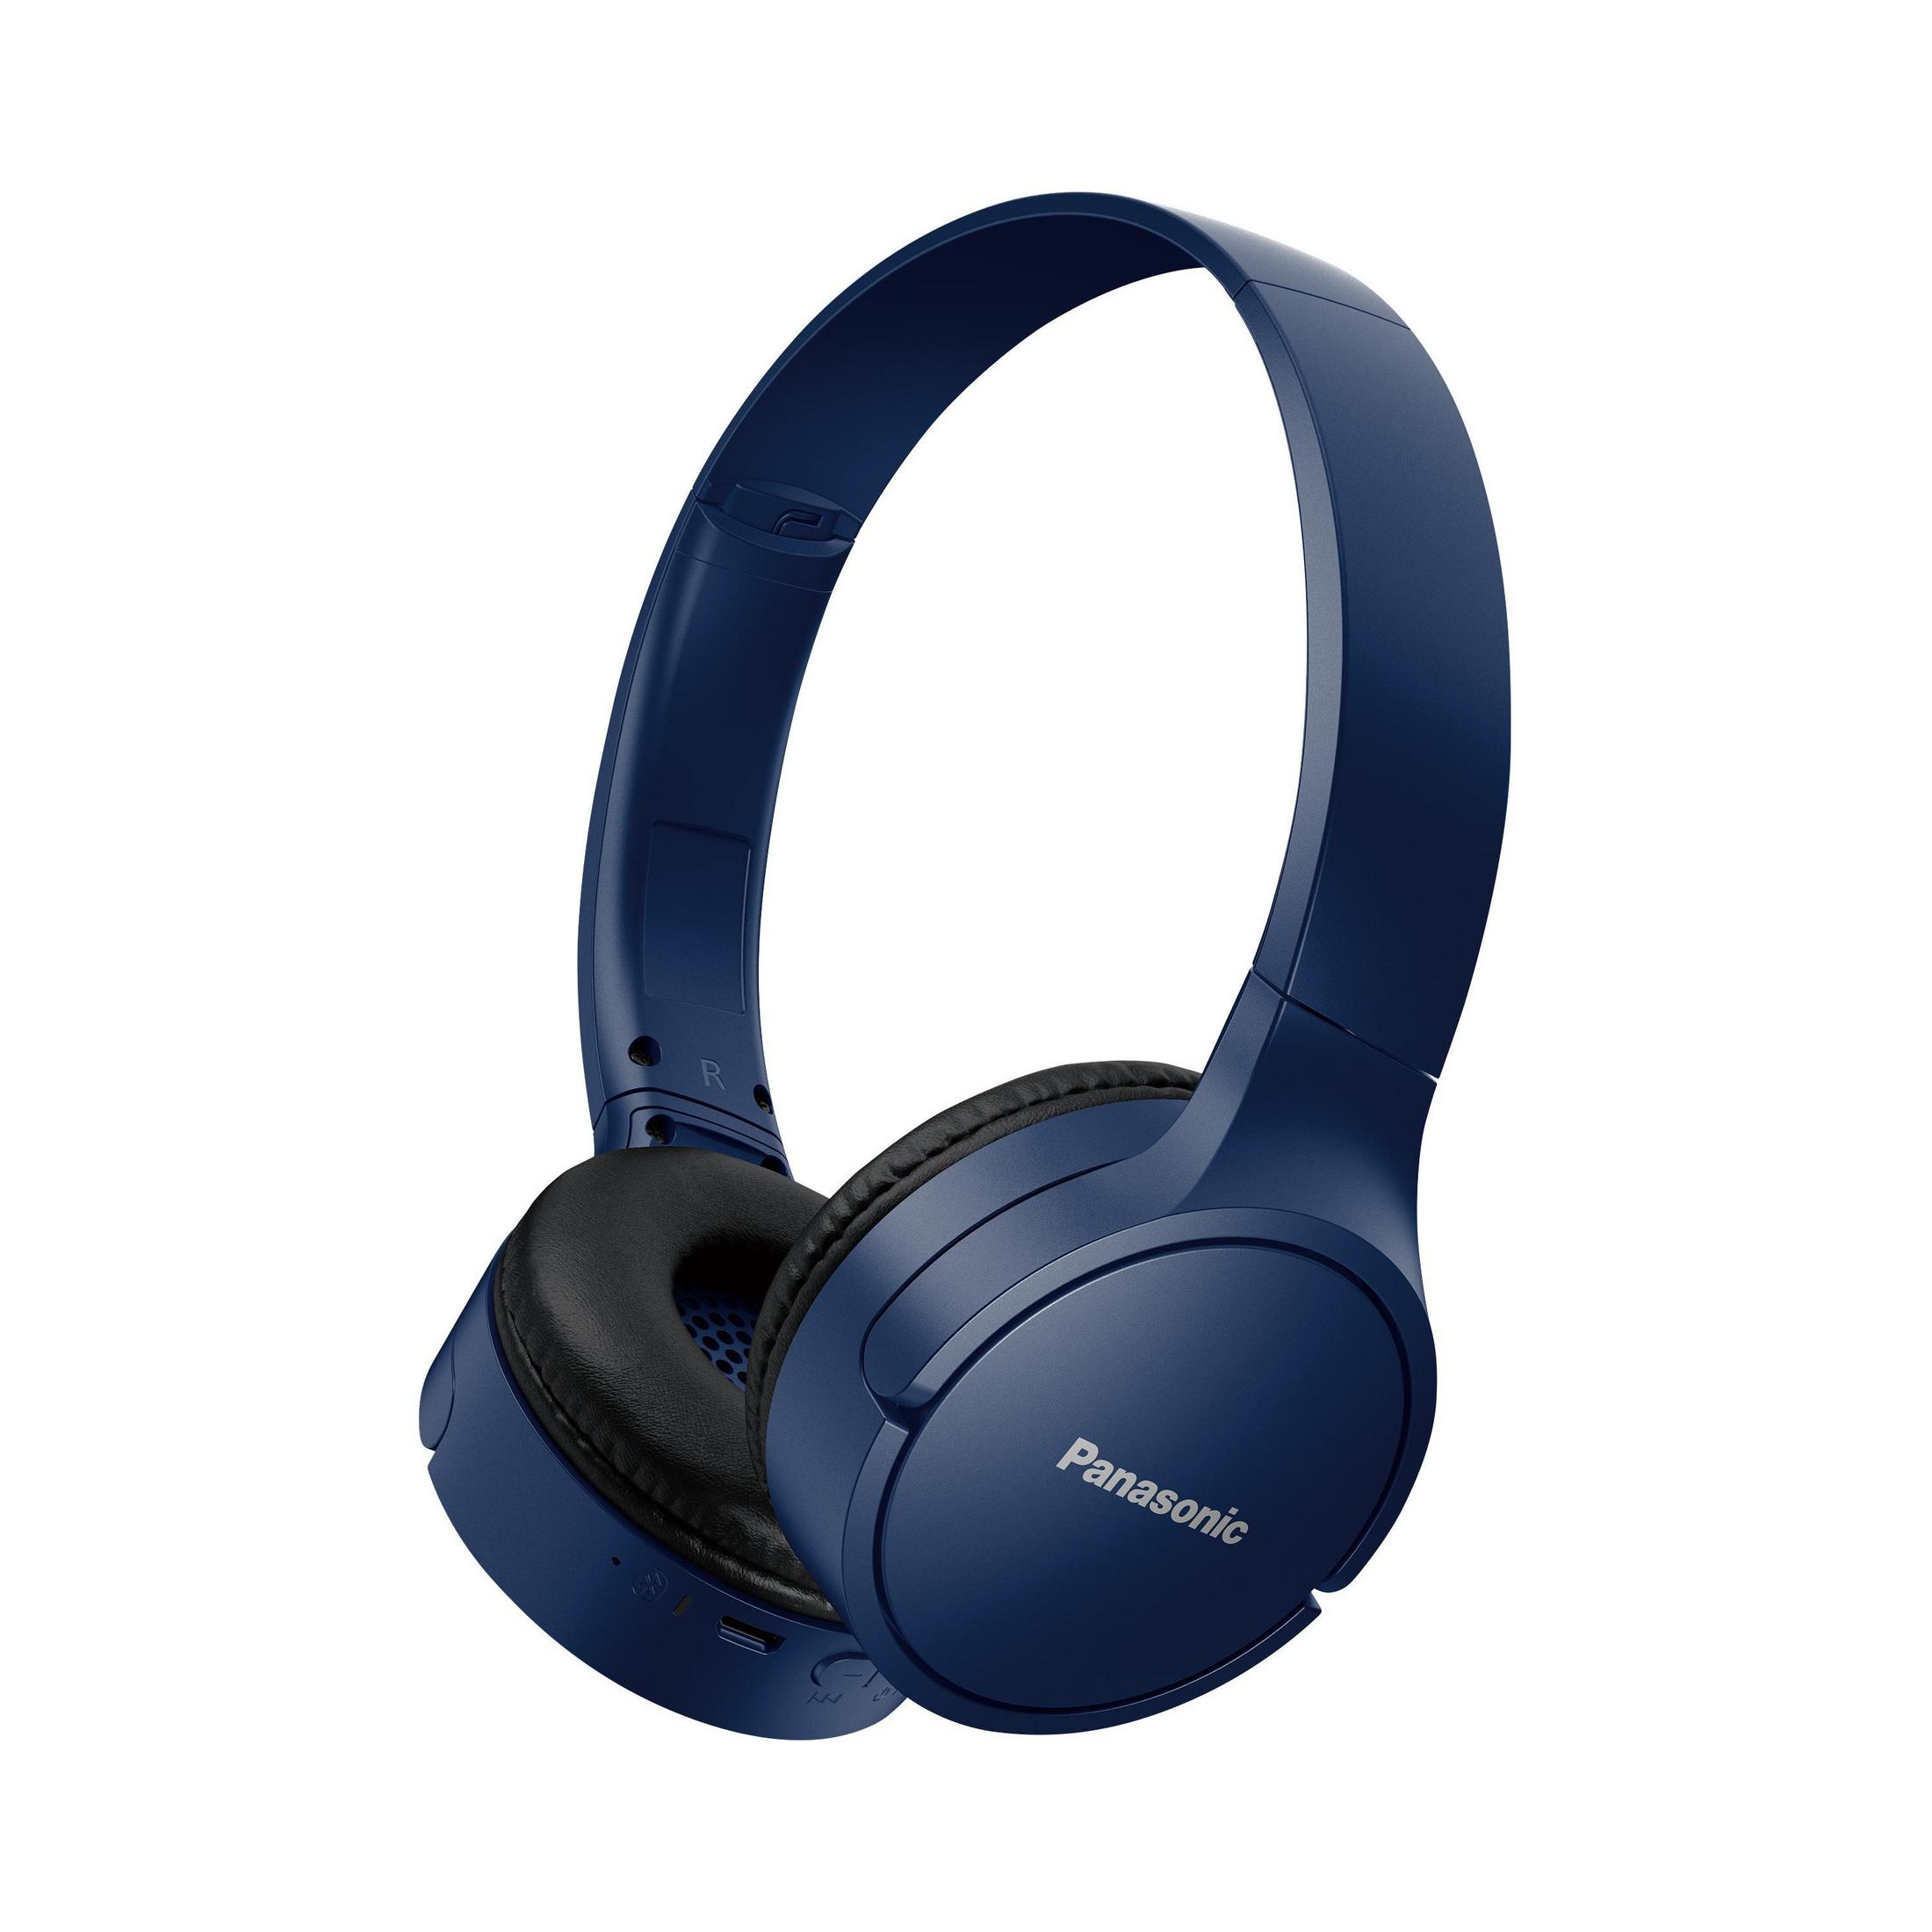 BLAU, On-ear KOPFHÖRER Bluetooth ON-EAR PANASONIC Blau RB-HF420BE-A Kopfhörer BT